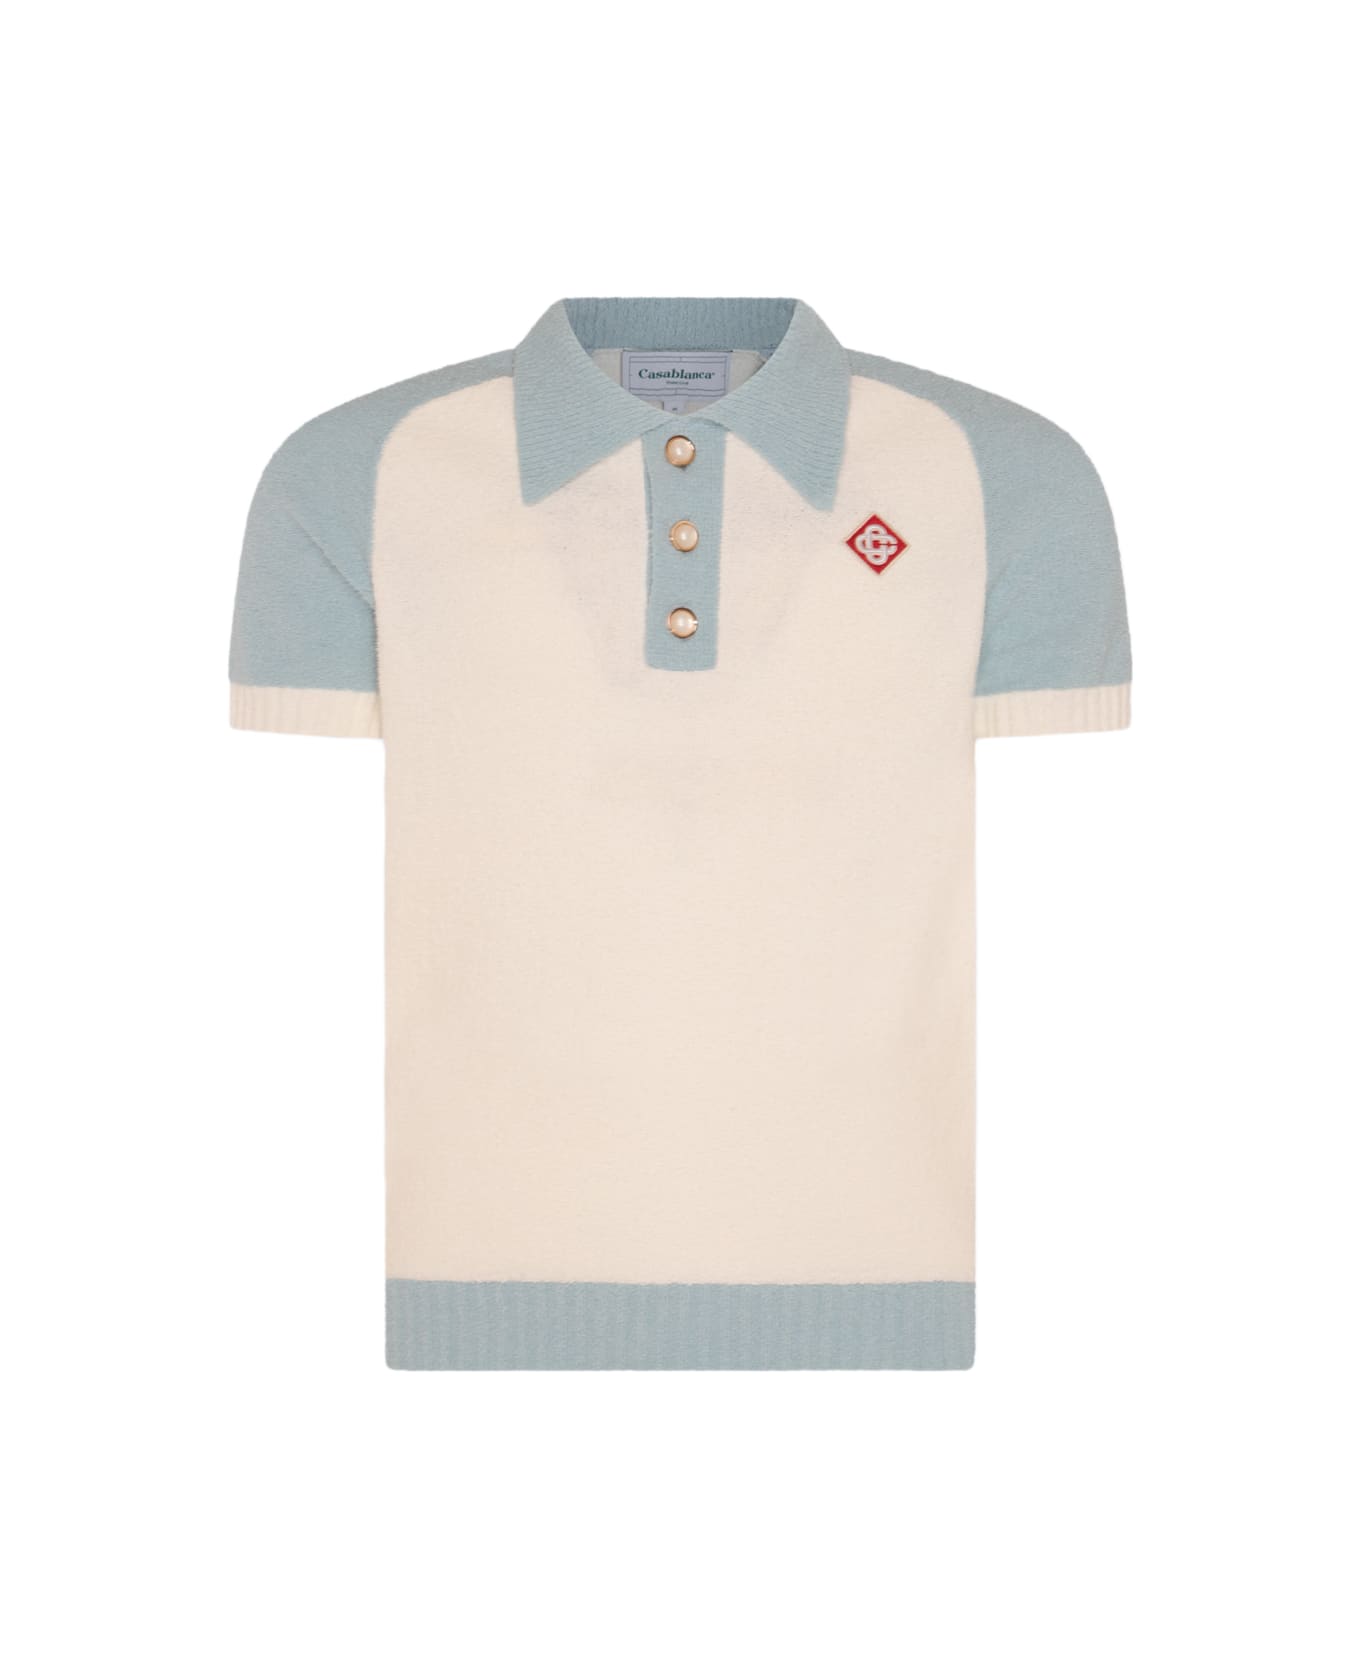 Casablanca White And Blue Cotton Polo Shirt - WHIBLU